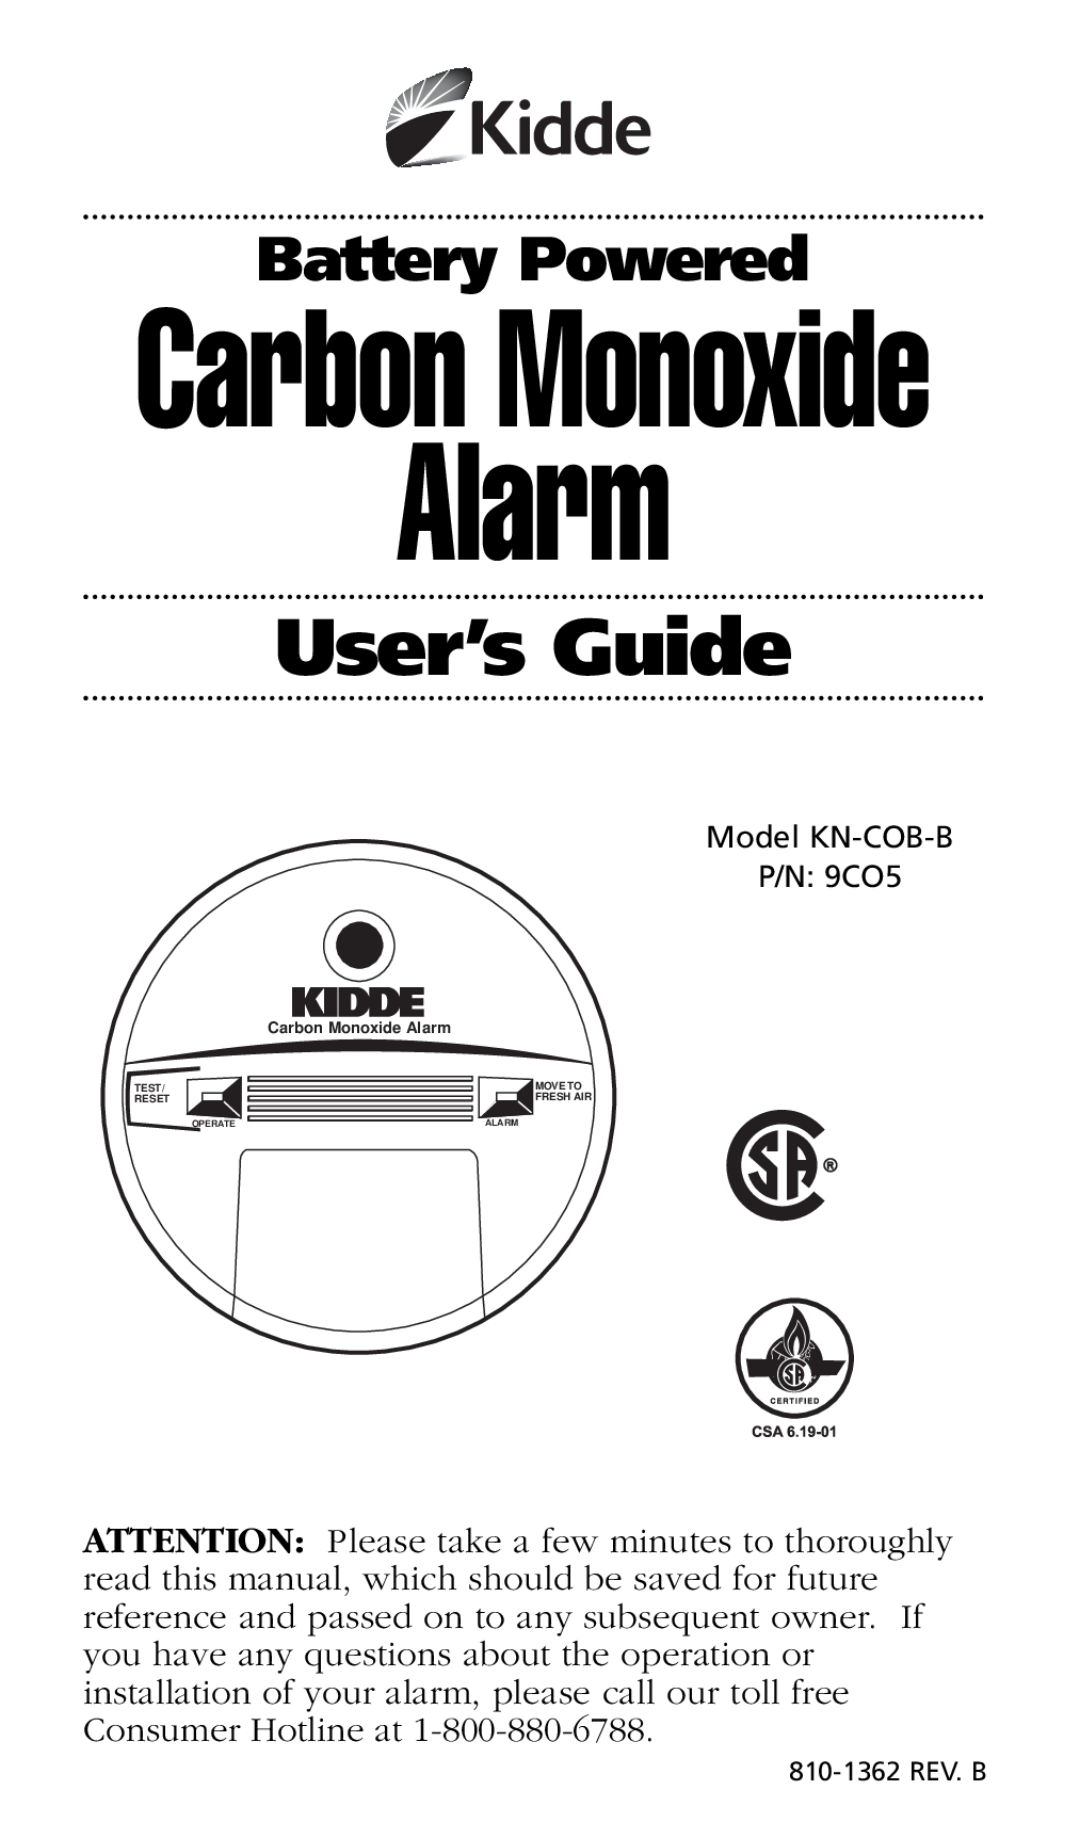 Kidde KN-OOB-B manual User’s Guide, Alarm, Carbon Monoxide, Battery Powered 